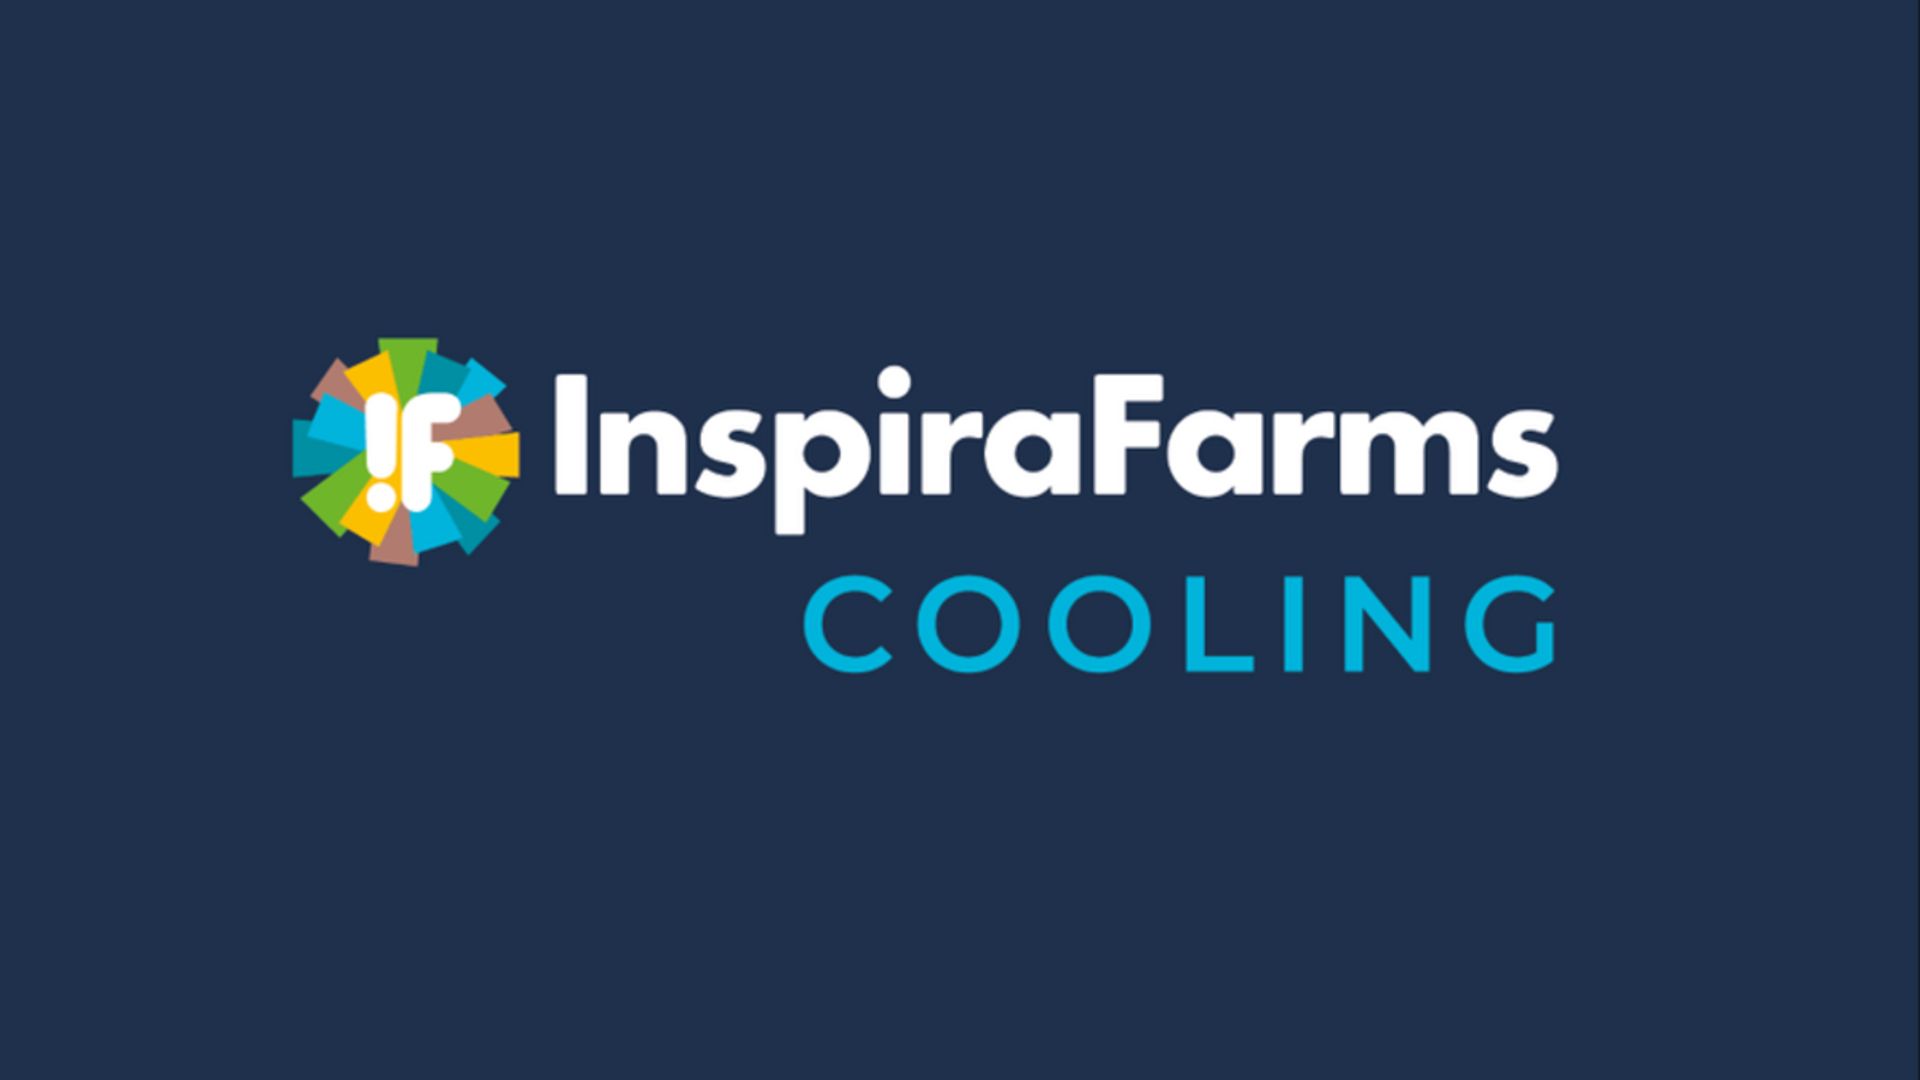 Image of the InspiraFarms Cooling logo